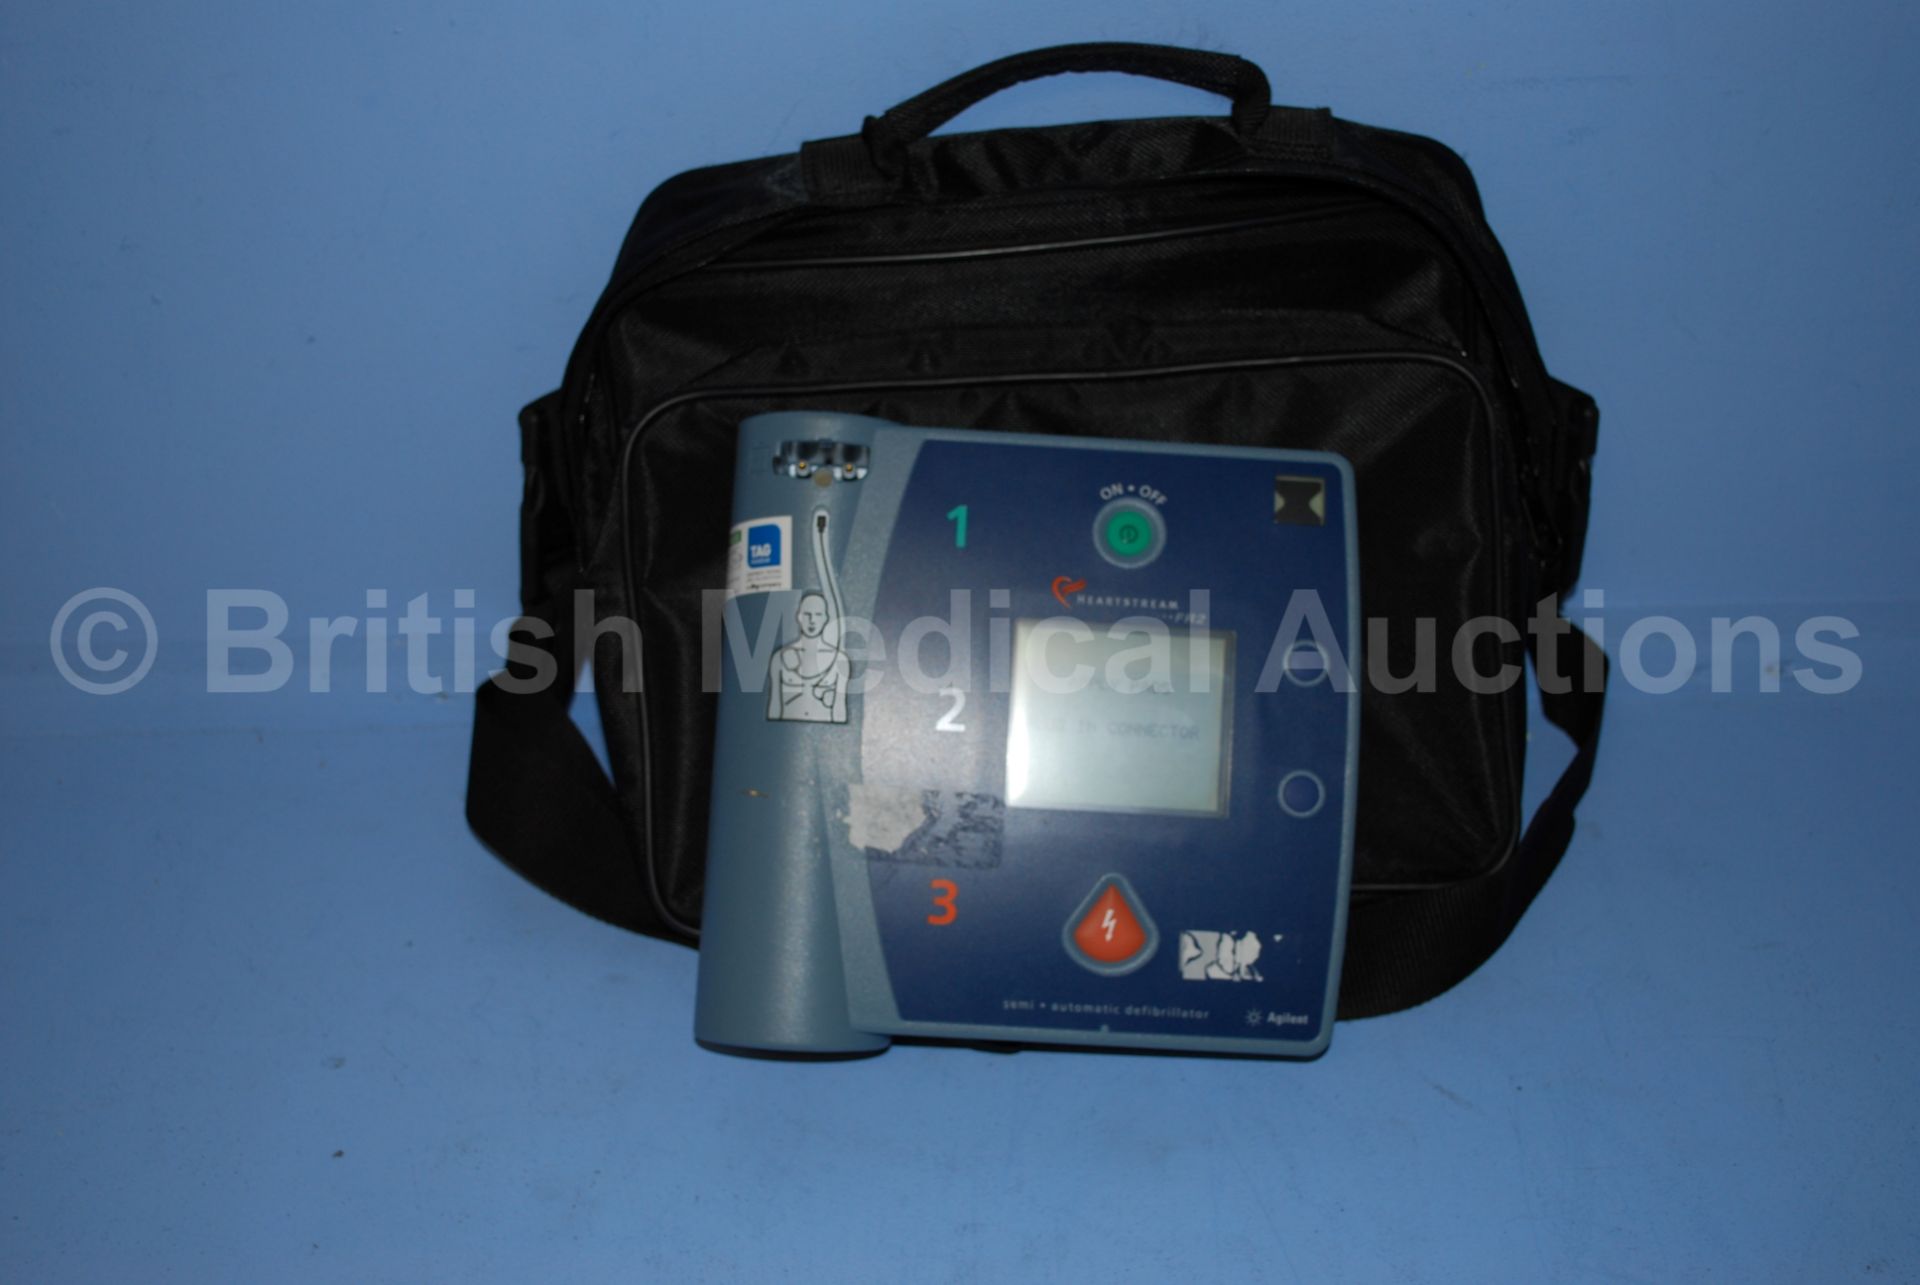 Agilent Heartstream FR2 Defibrillator in Black Cas - Image 2 of 4